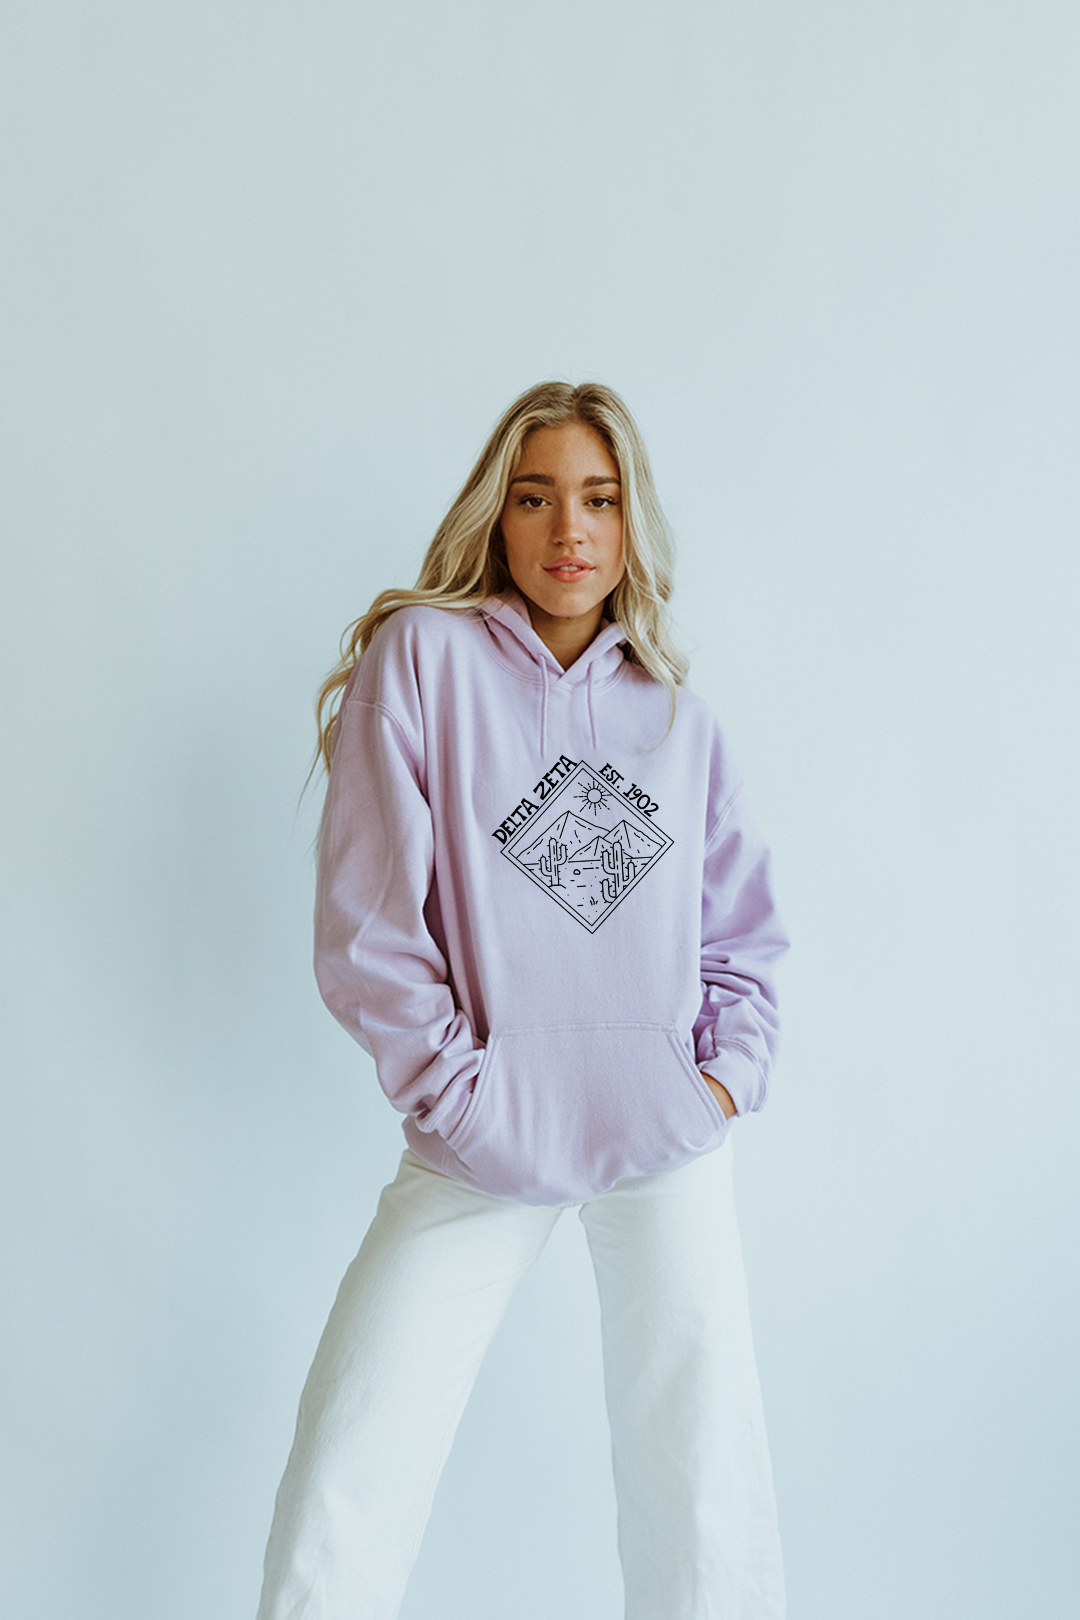 Lavender hoodie - Delta Zeta